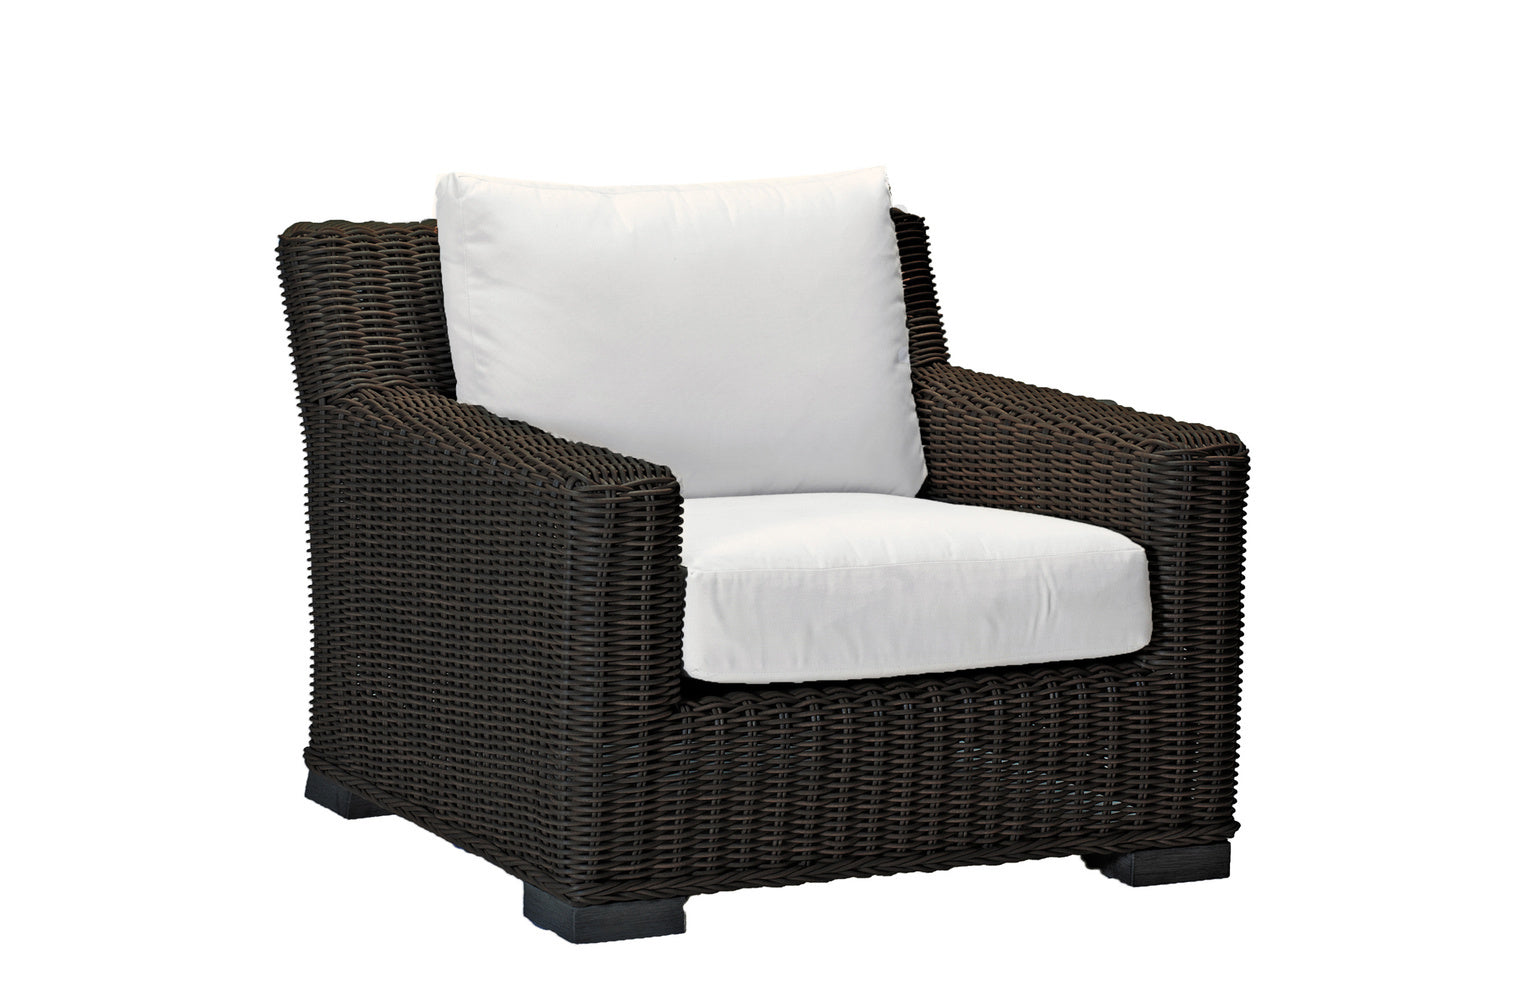 Rustic Wicker Lounge Chair